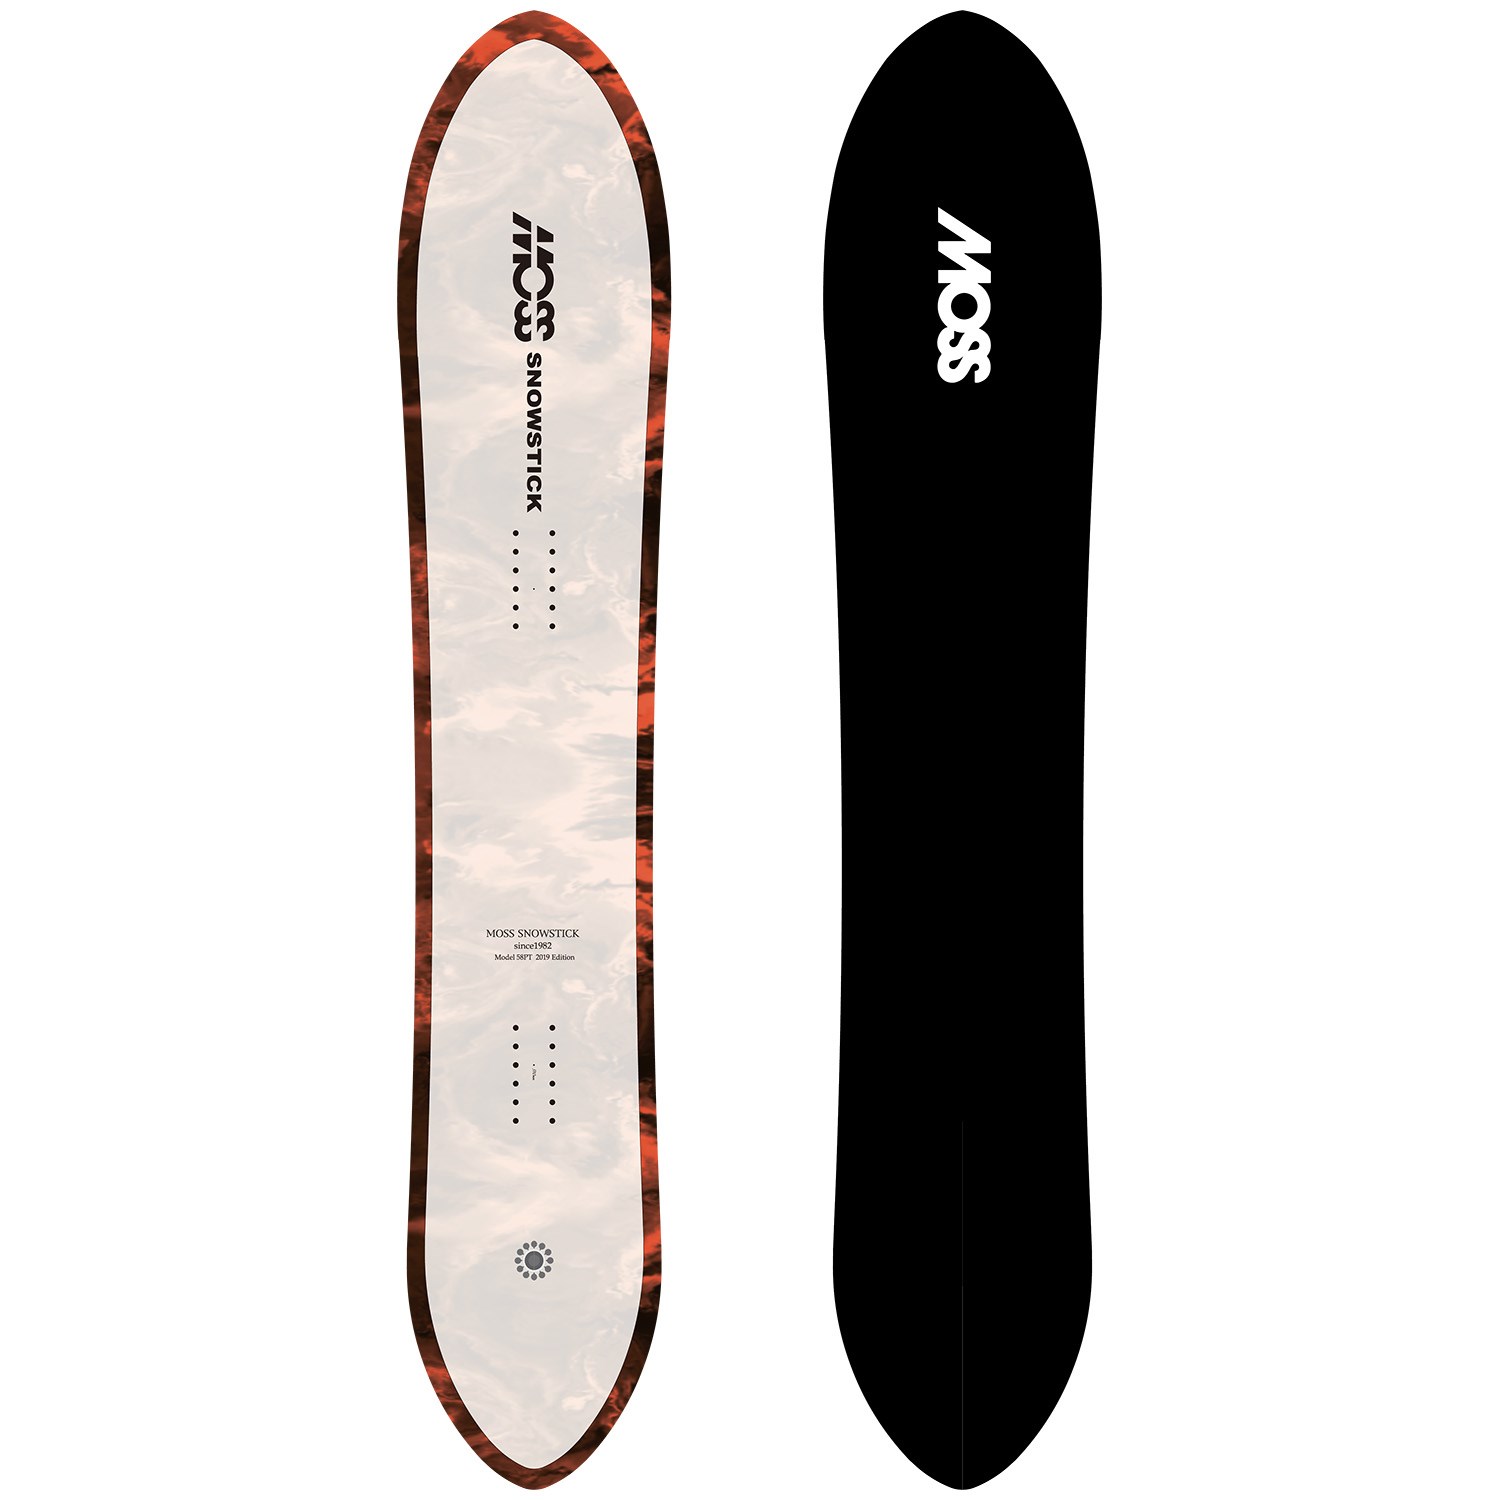 Moss Snowstick 58 Pintail Snowboard 2020 | evo